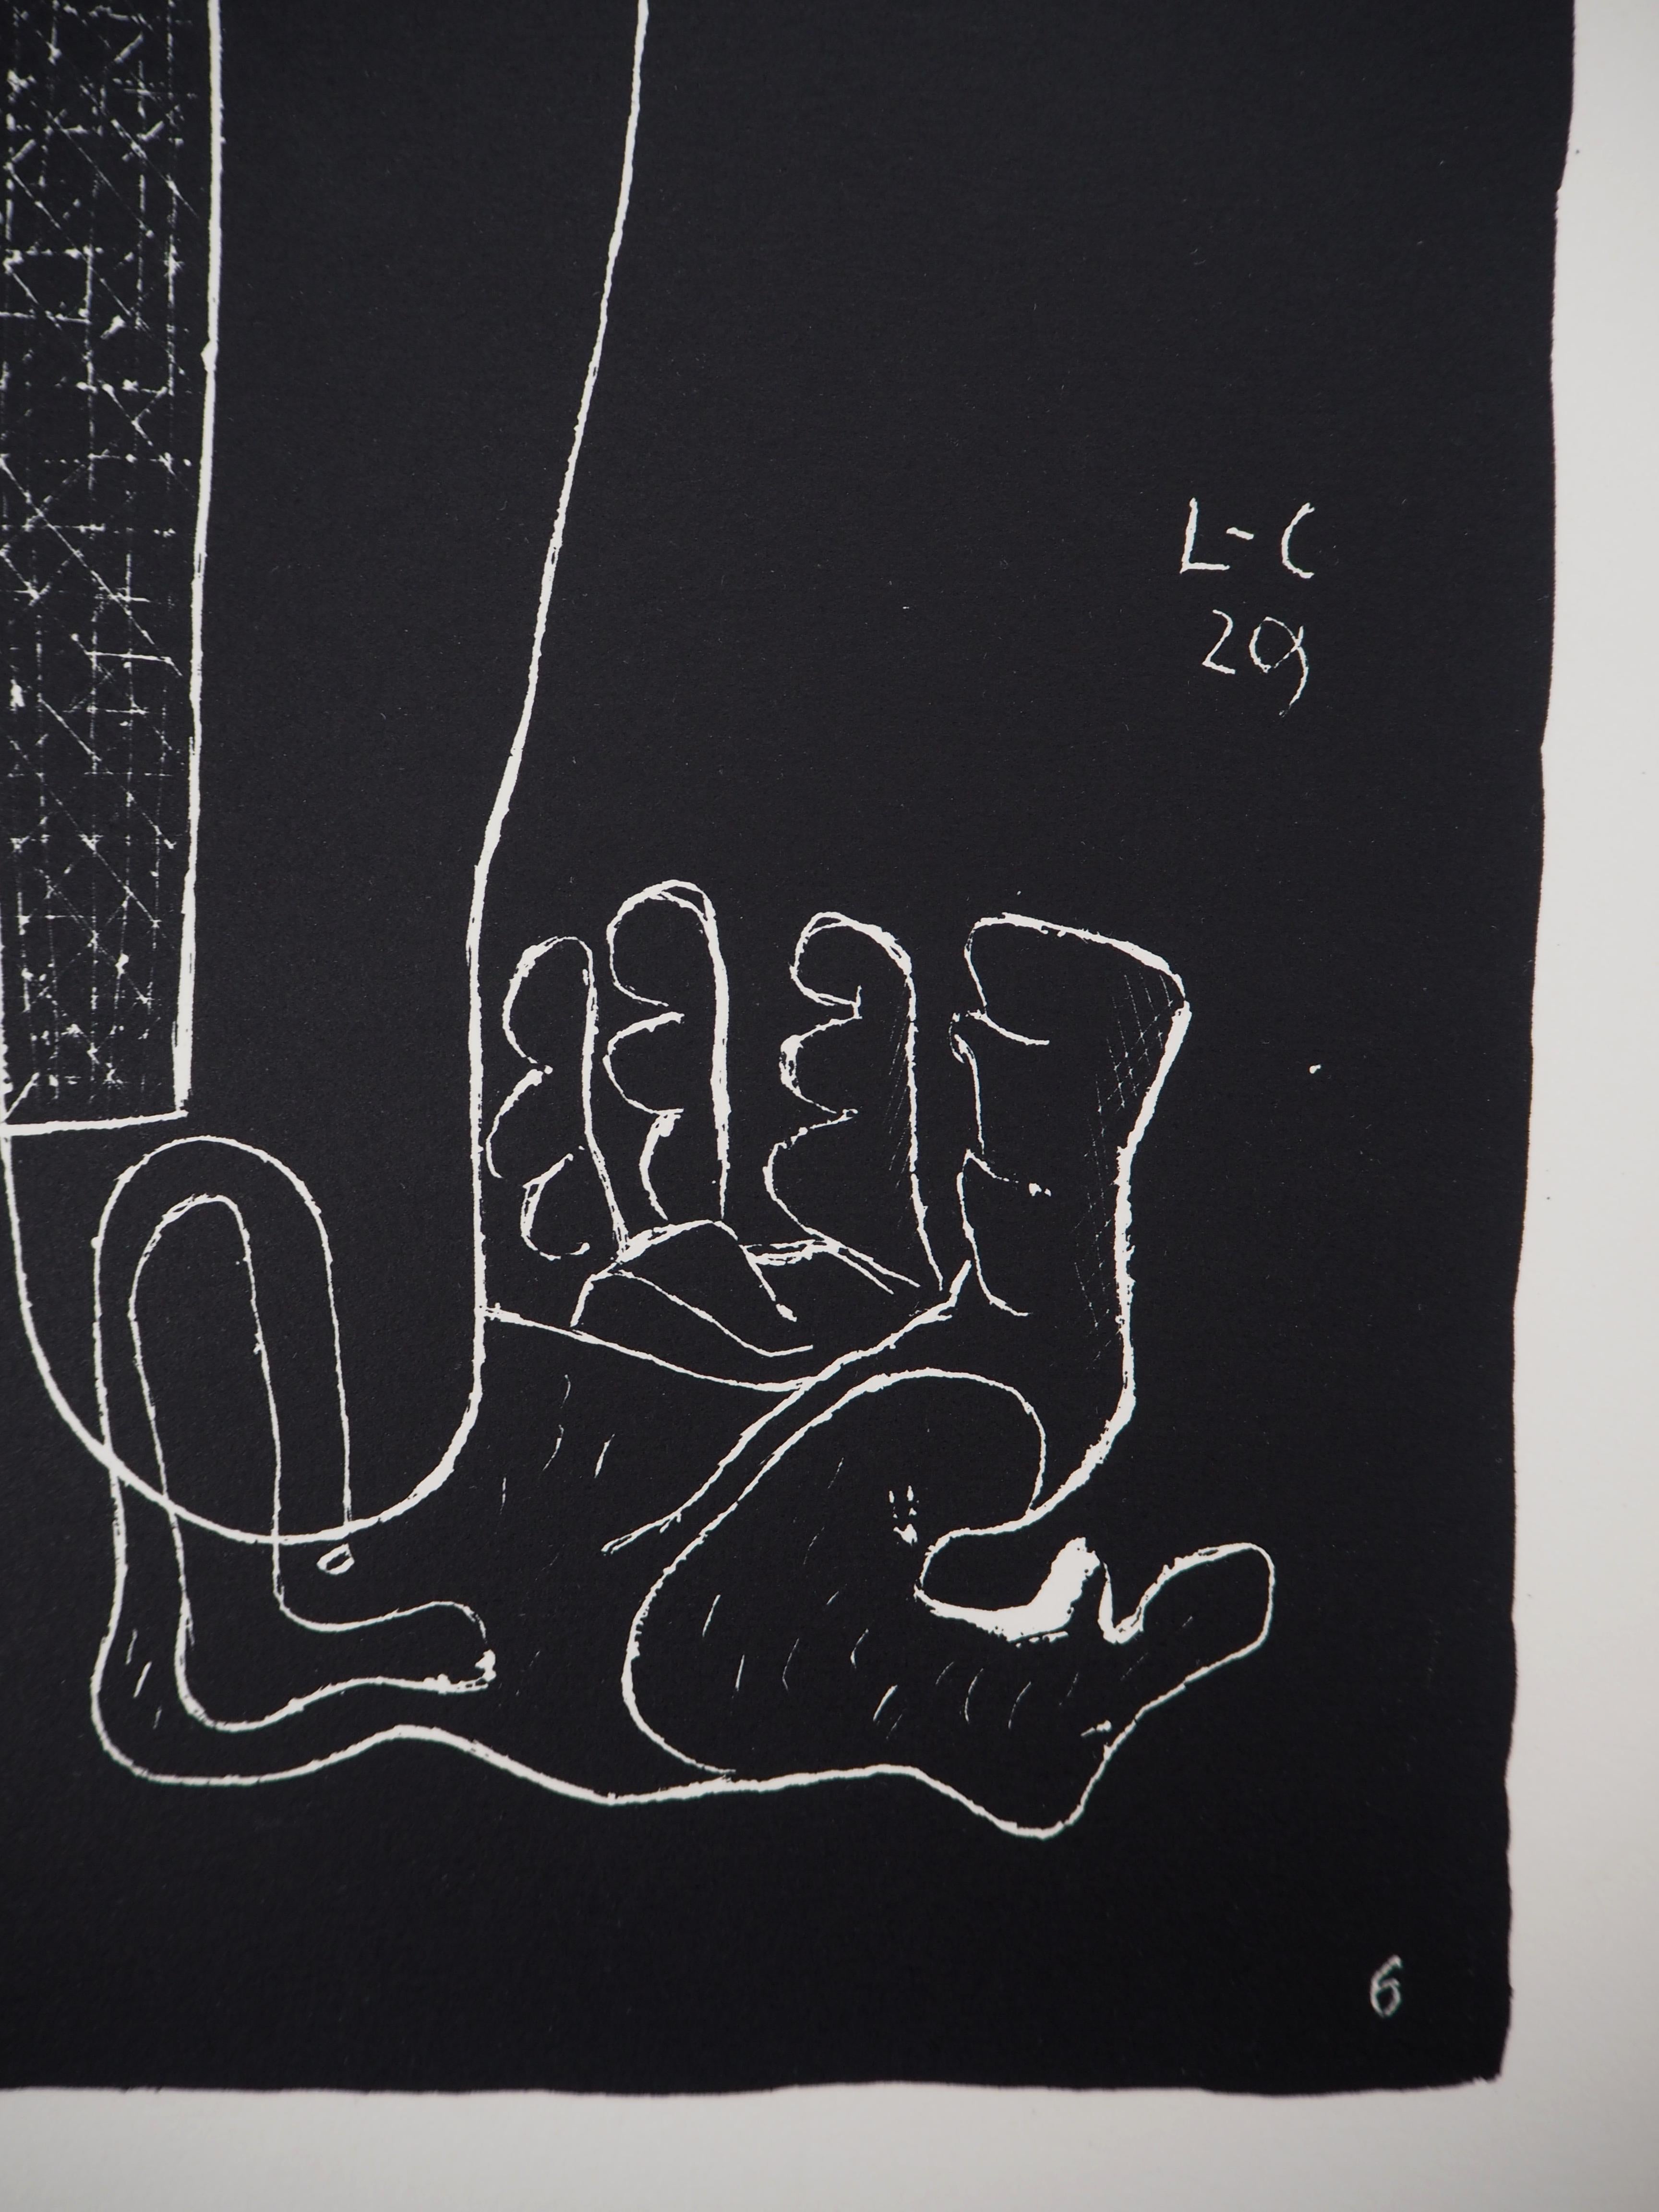 Still Life with Hand - Original lithograph (Atelier Michel Cassé), 1964 - Modern Print by Le Corbusier